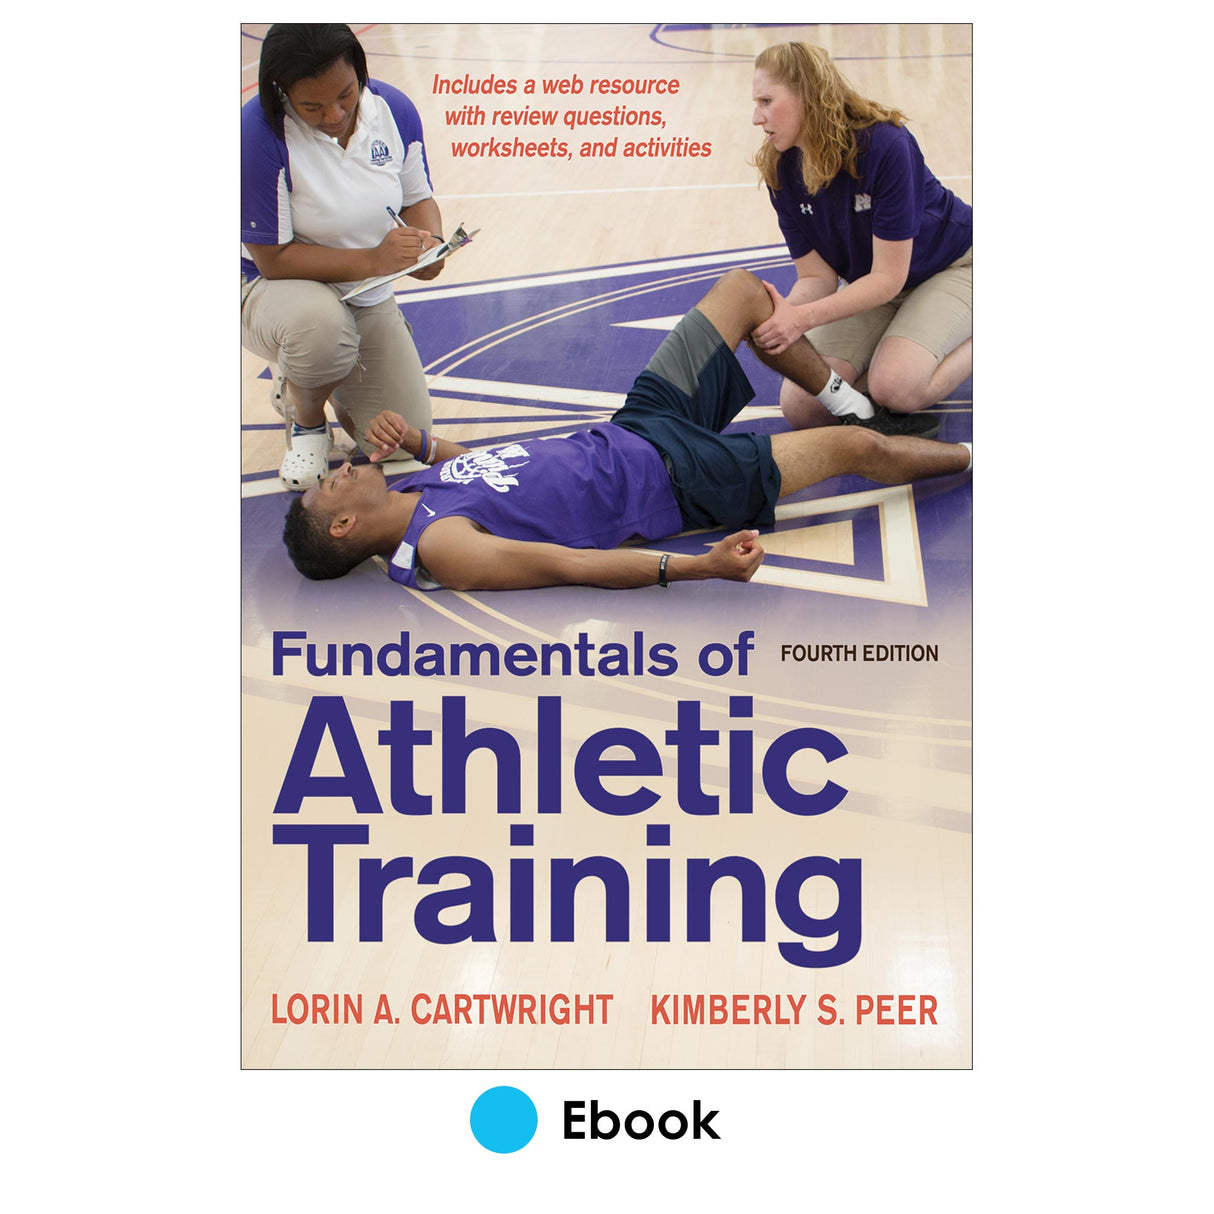 Fundamentals of Athletic Training 4th Edition epub With Web Resource